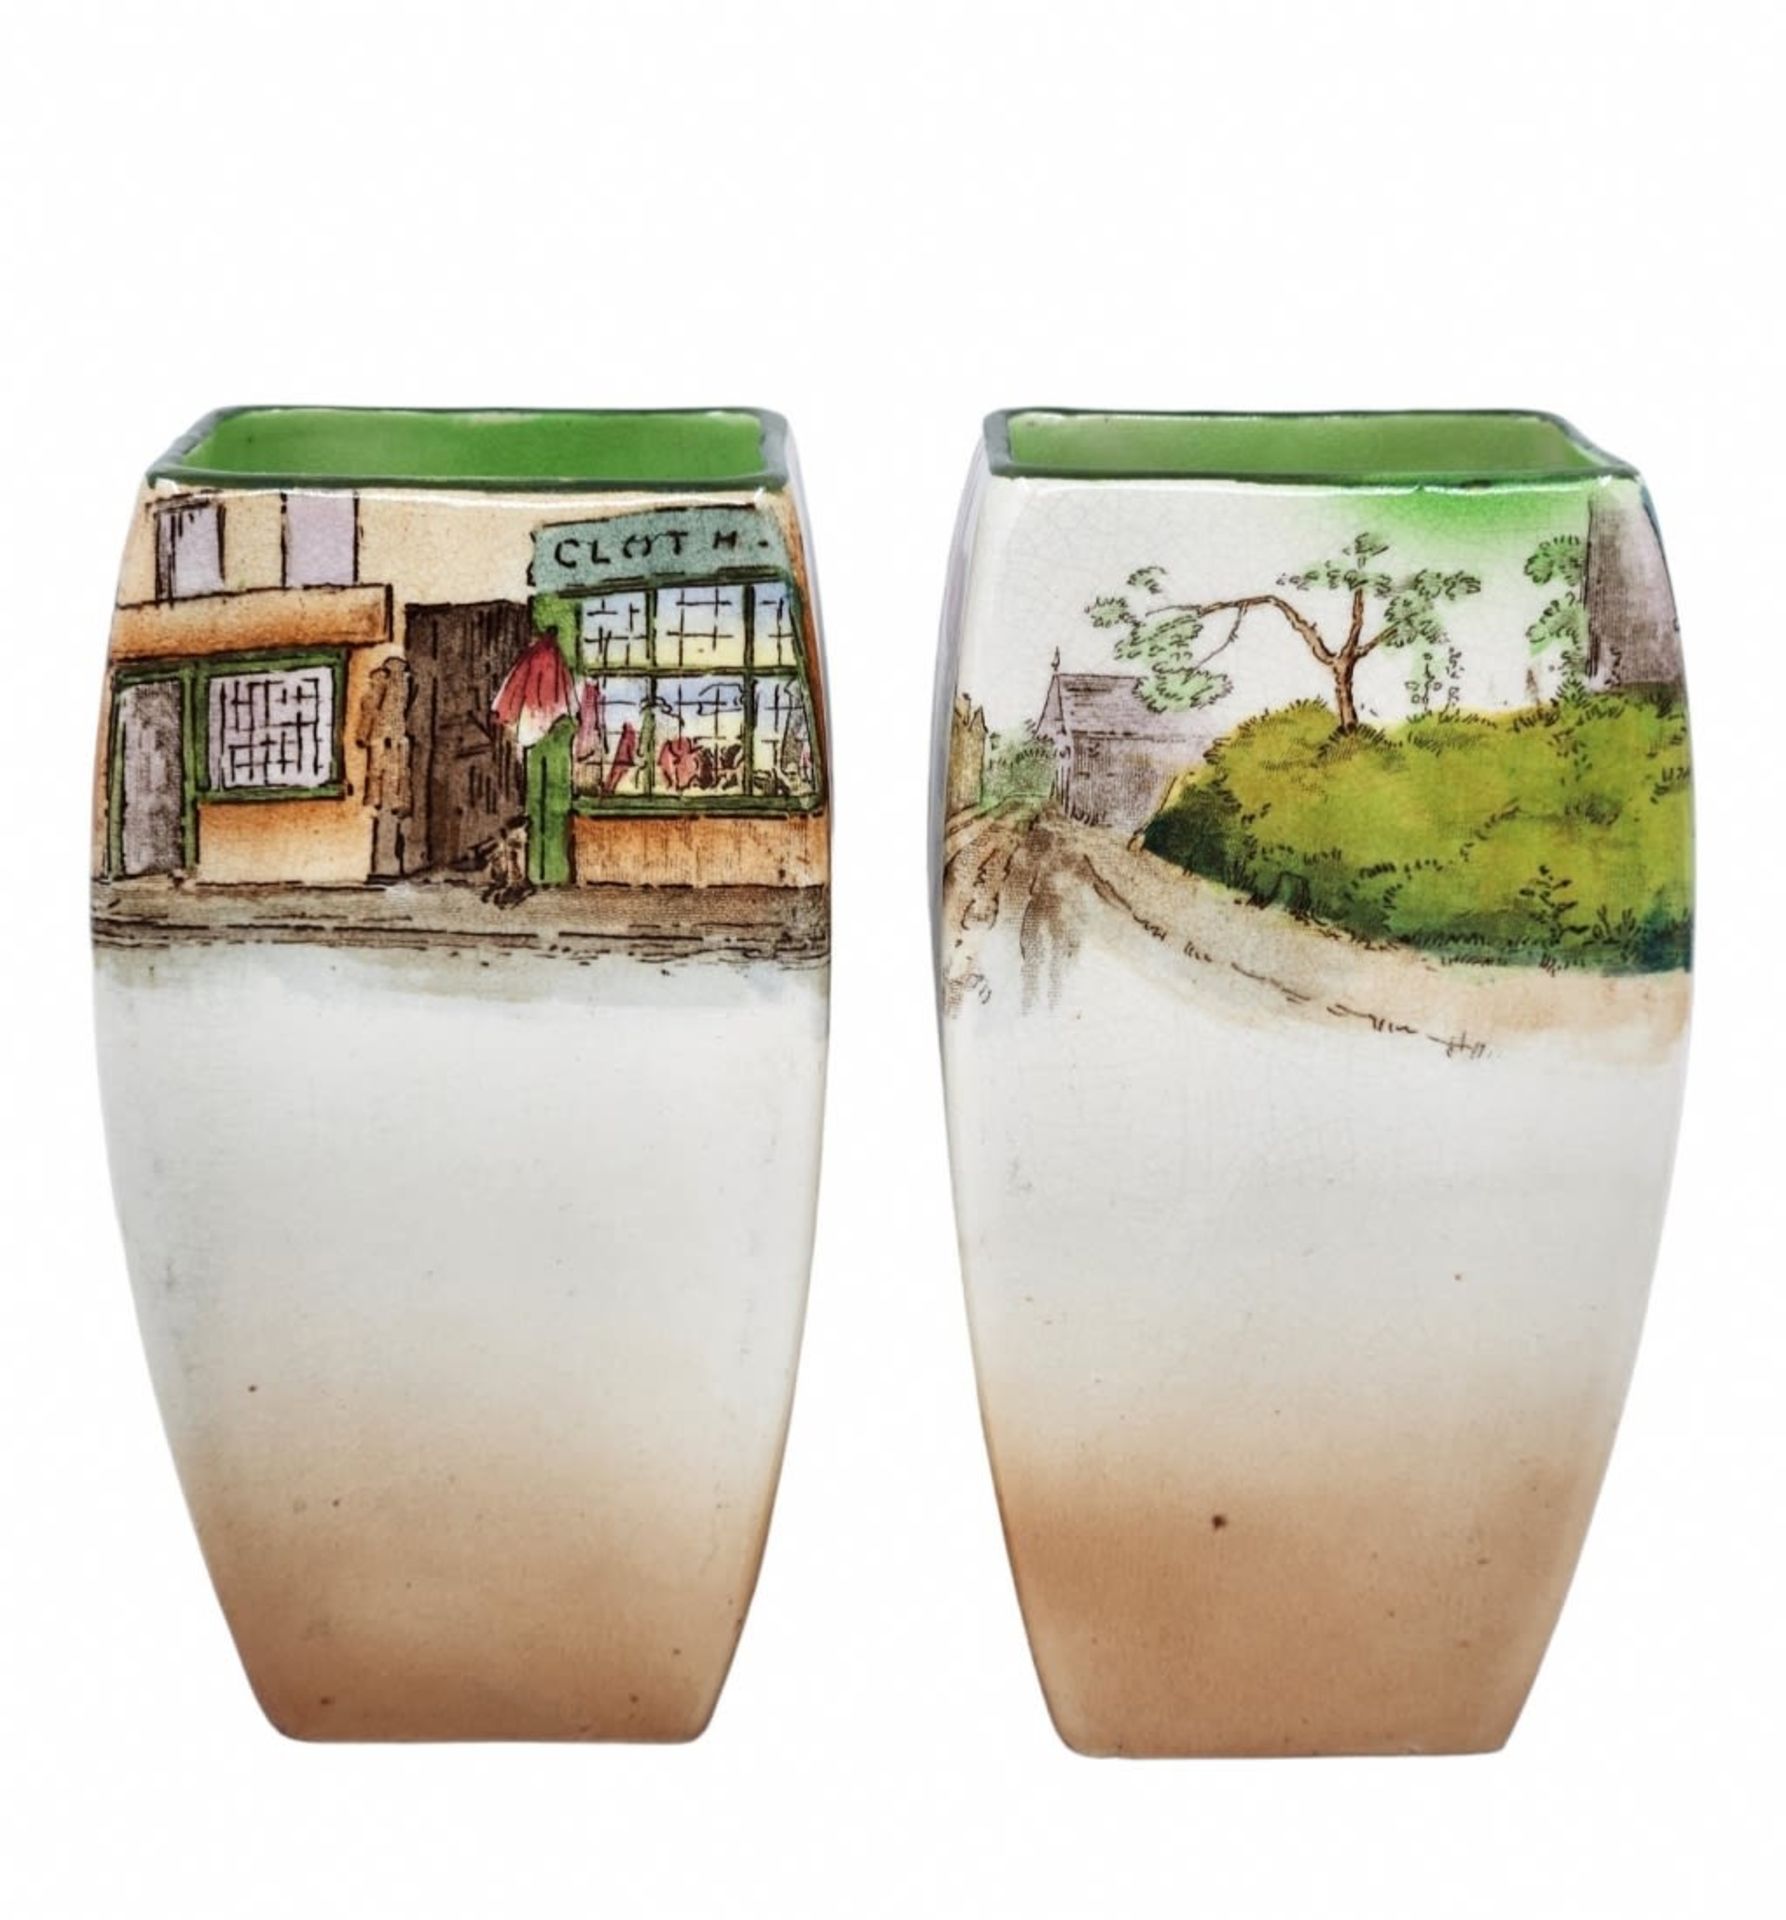 A pair of English jugs made by Royal Doulton (Royal Doulton), dickens Ware series, decorative - Image 2 of 7